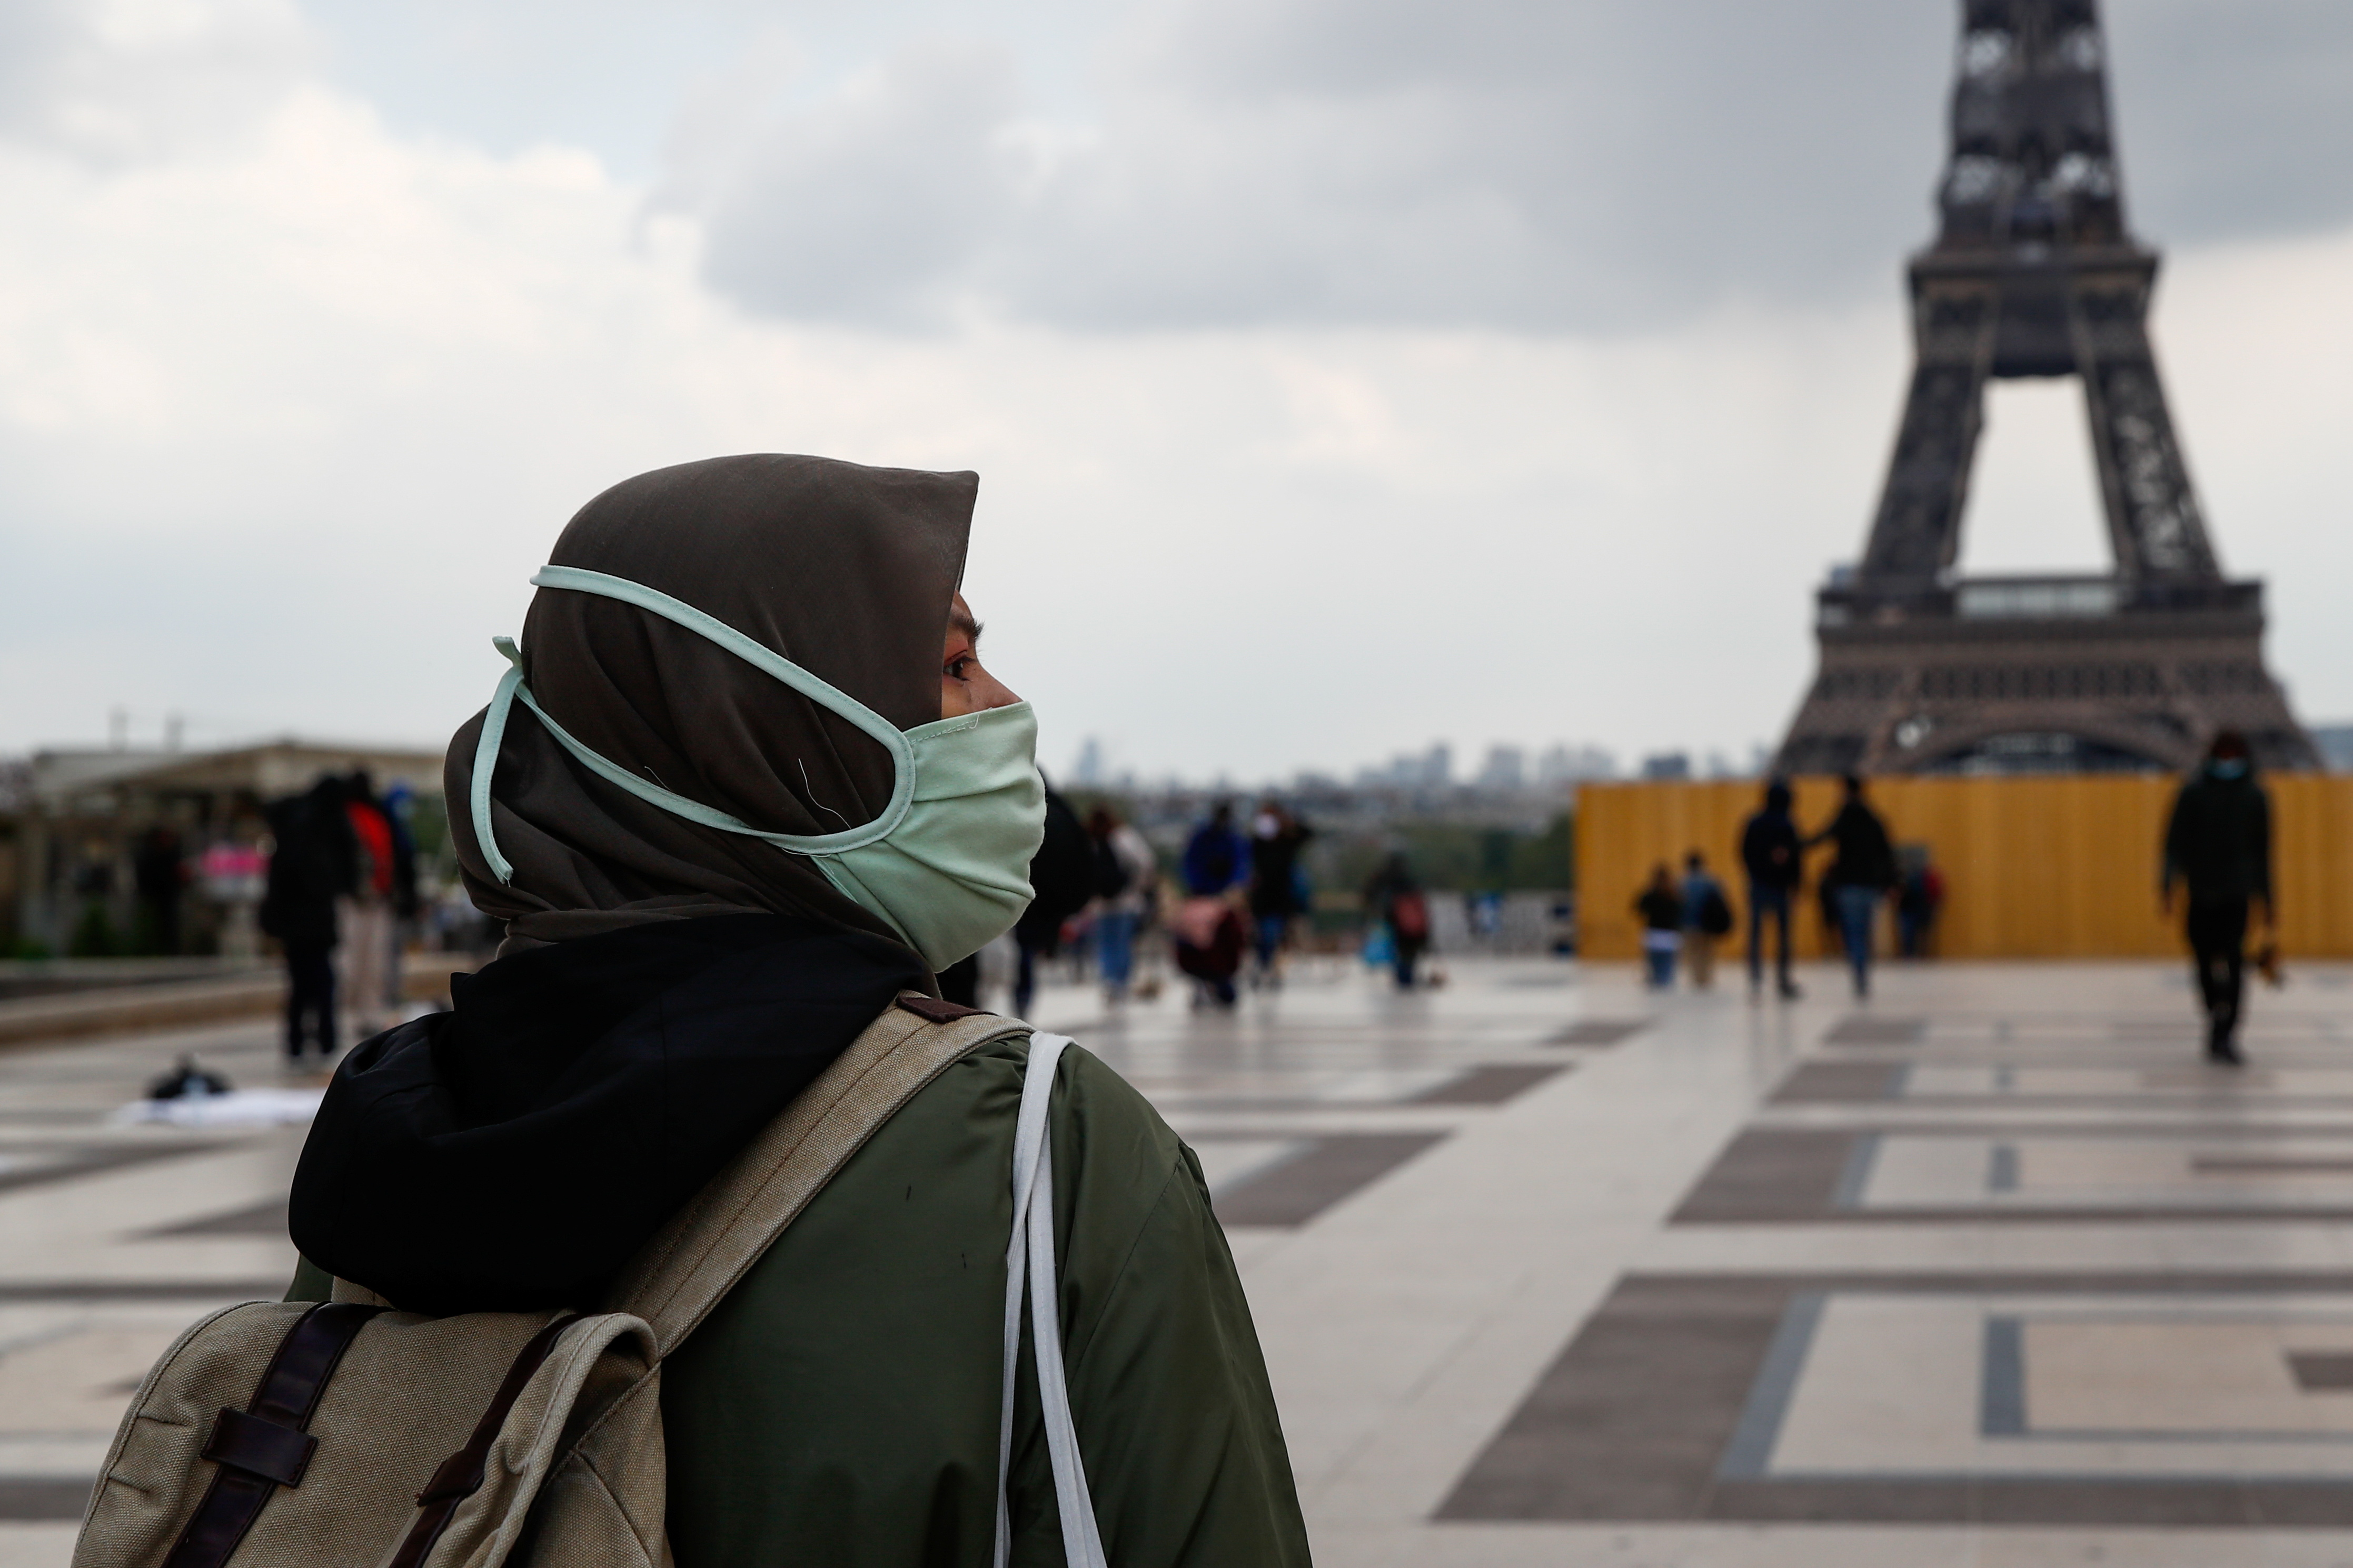 A woman wearing a hijab walks at Trocadero square near the Eiffel Tower in Paris